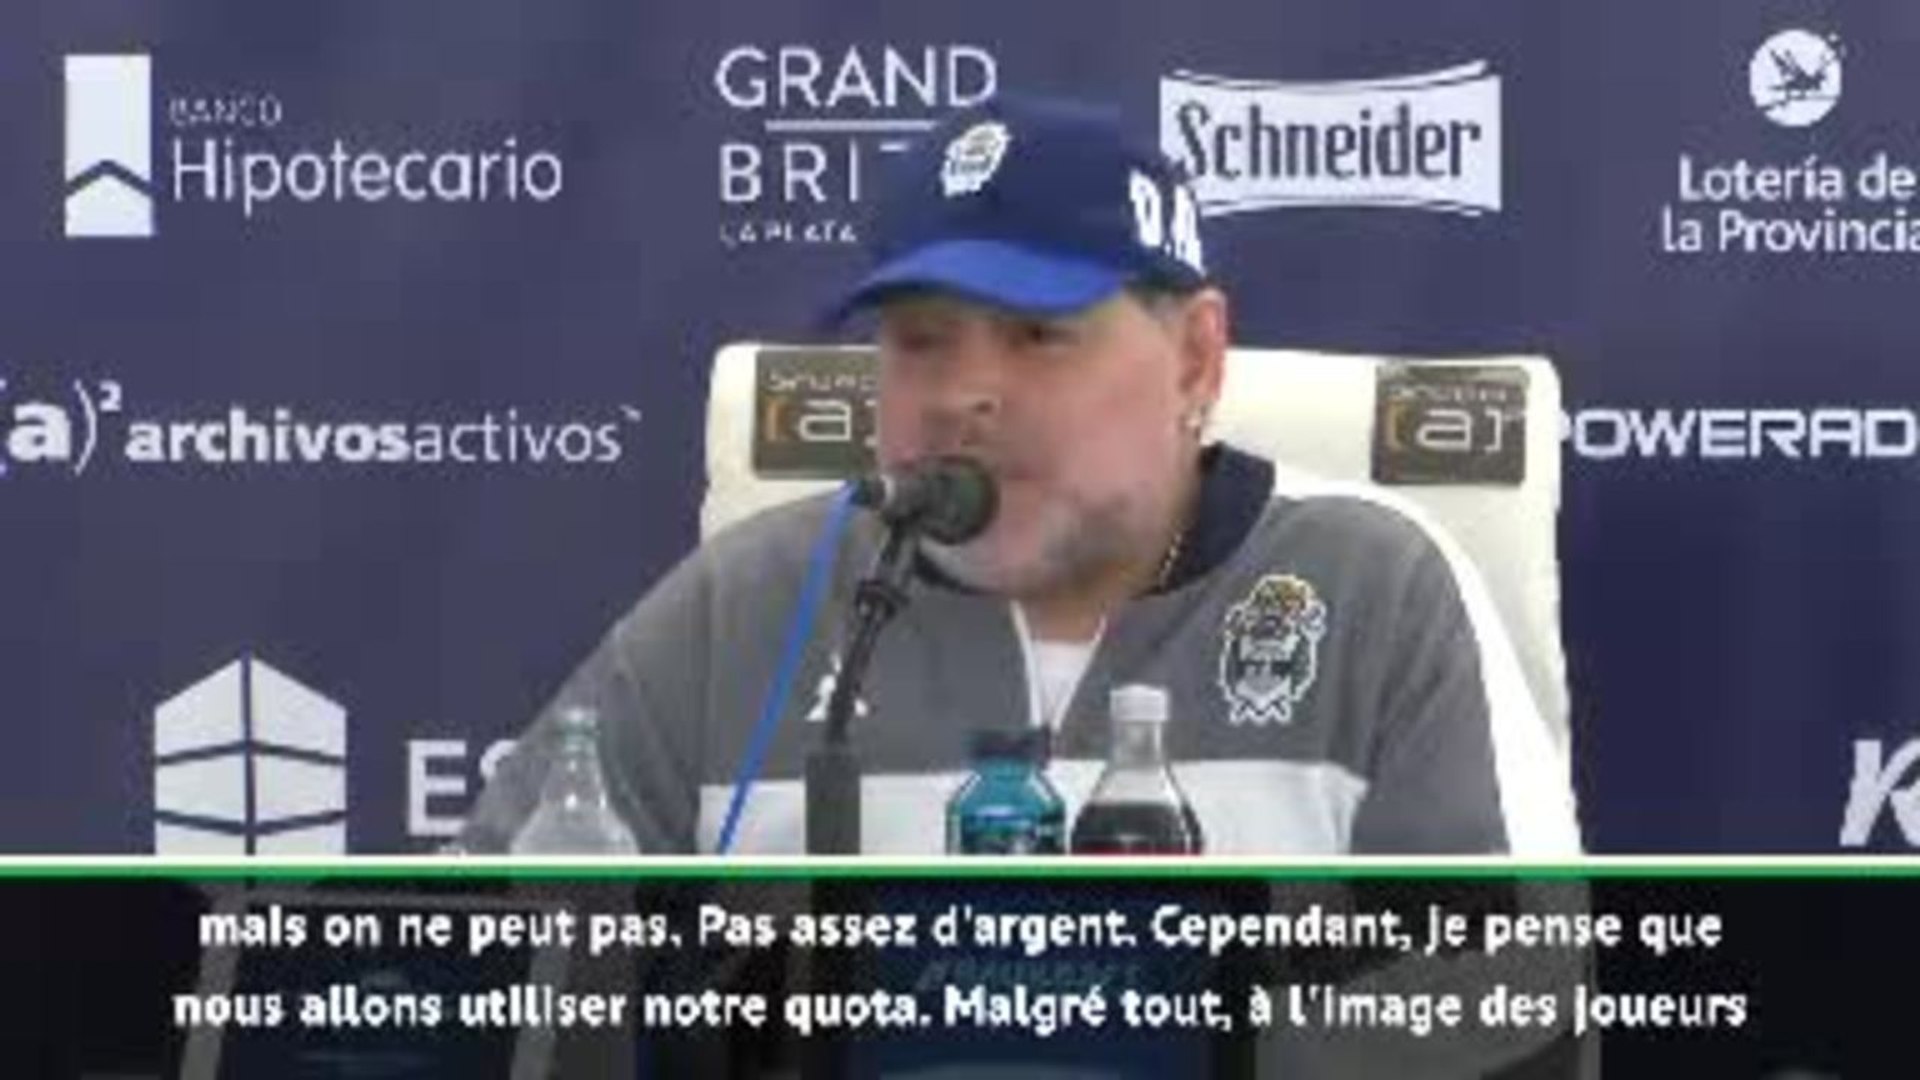 Gimnasia - Maradona : "On aimerait recruter Van Basten, mais..." - Vidéo  Dailymotion